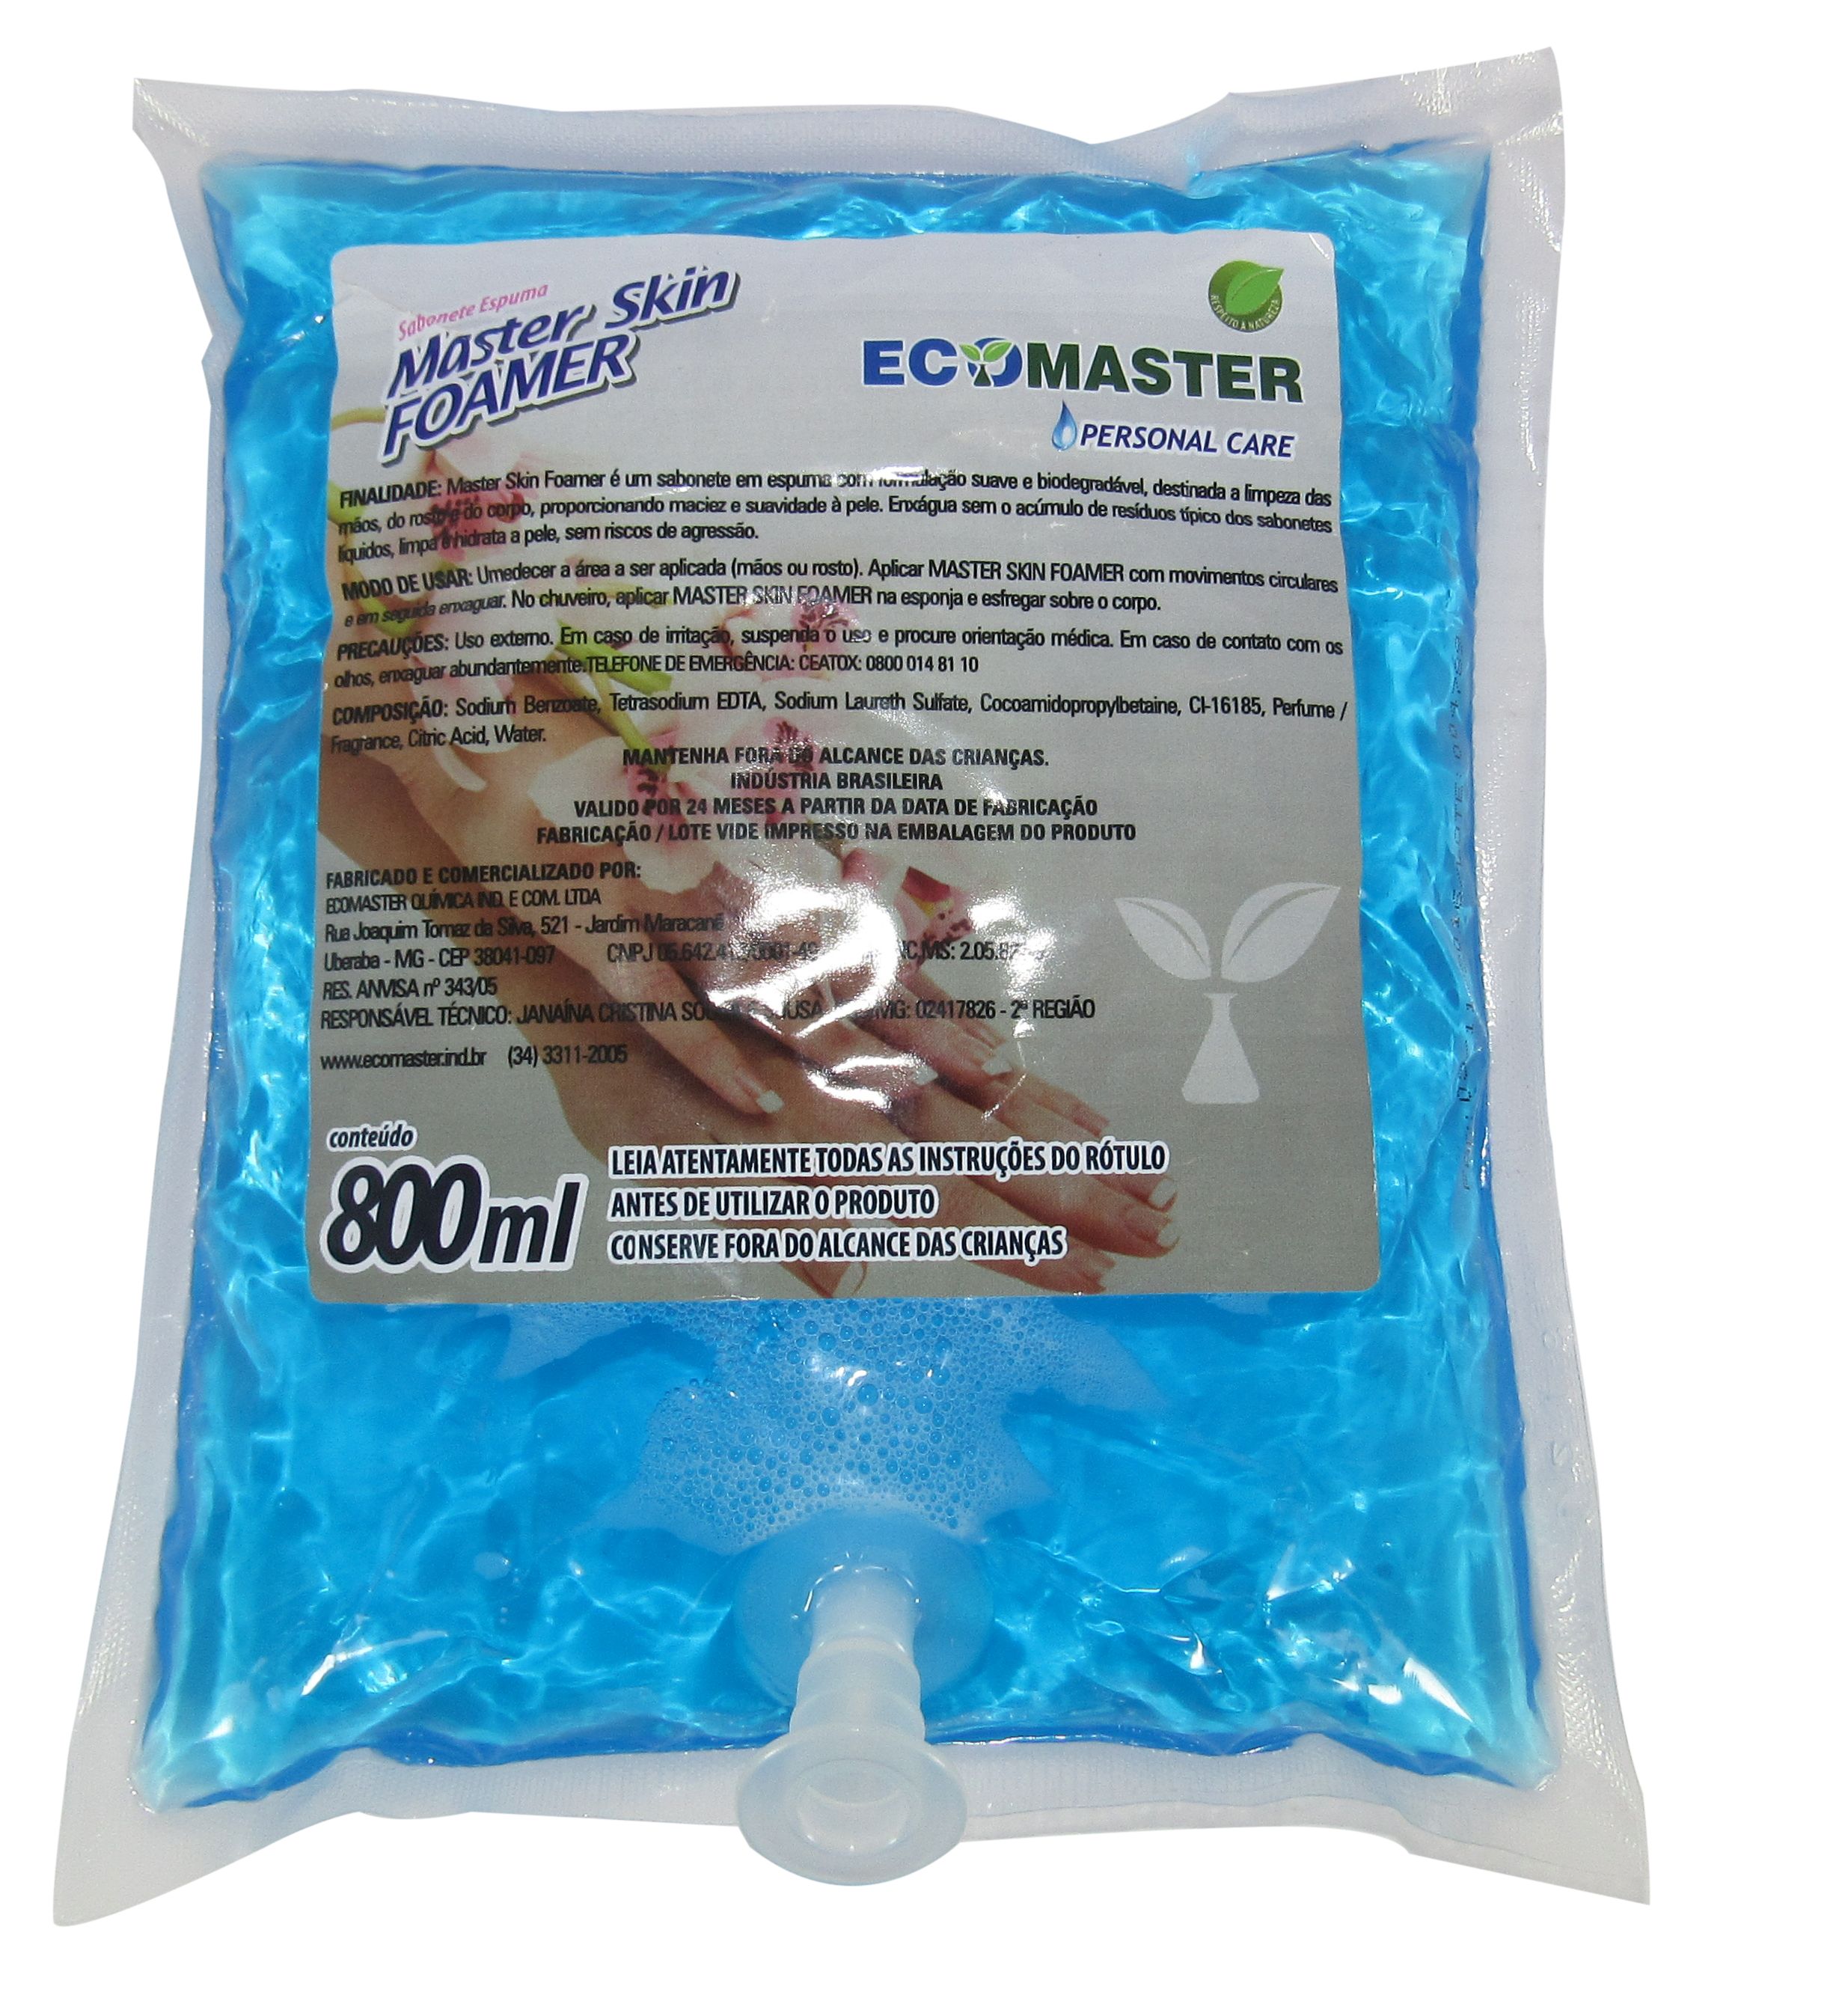 37.0008 - Ecomaster Skin Foamer Ocean 800ml